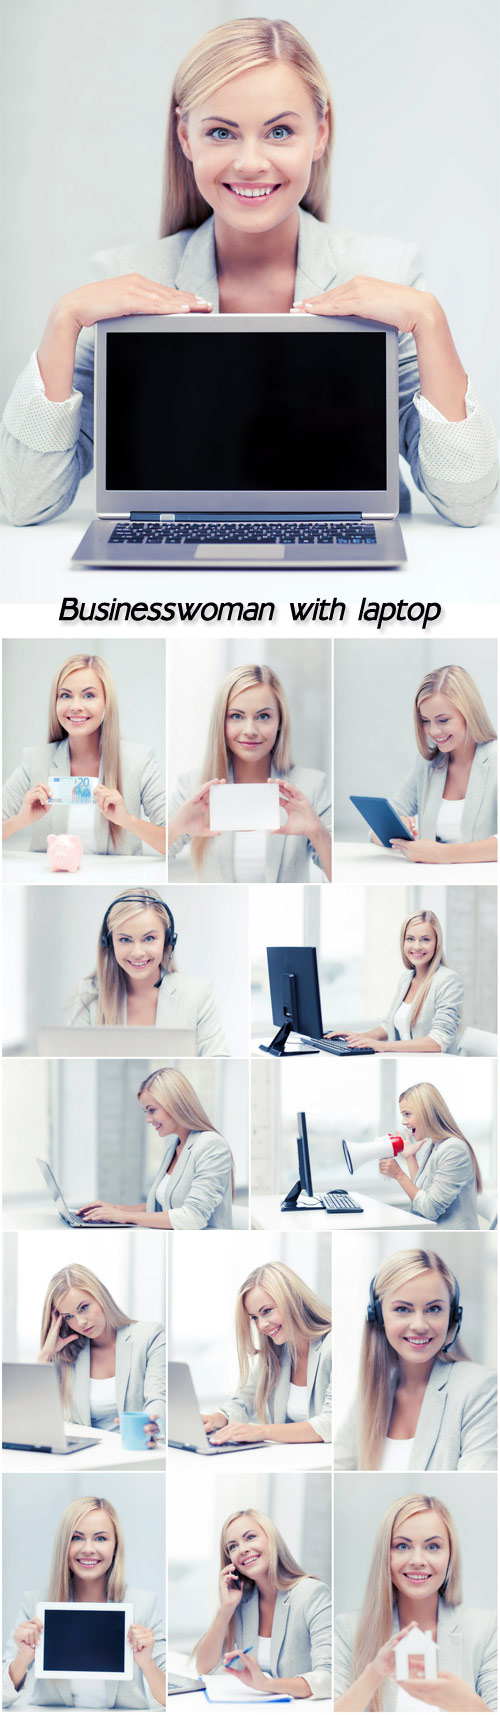 Businesswoman with laptop, female helpline operator